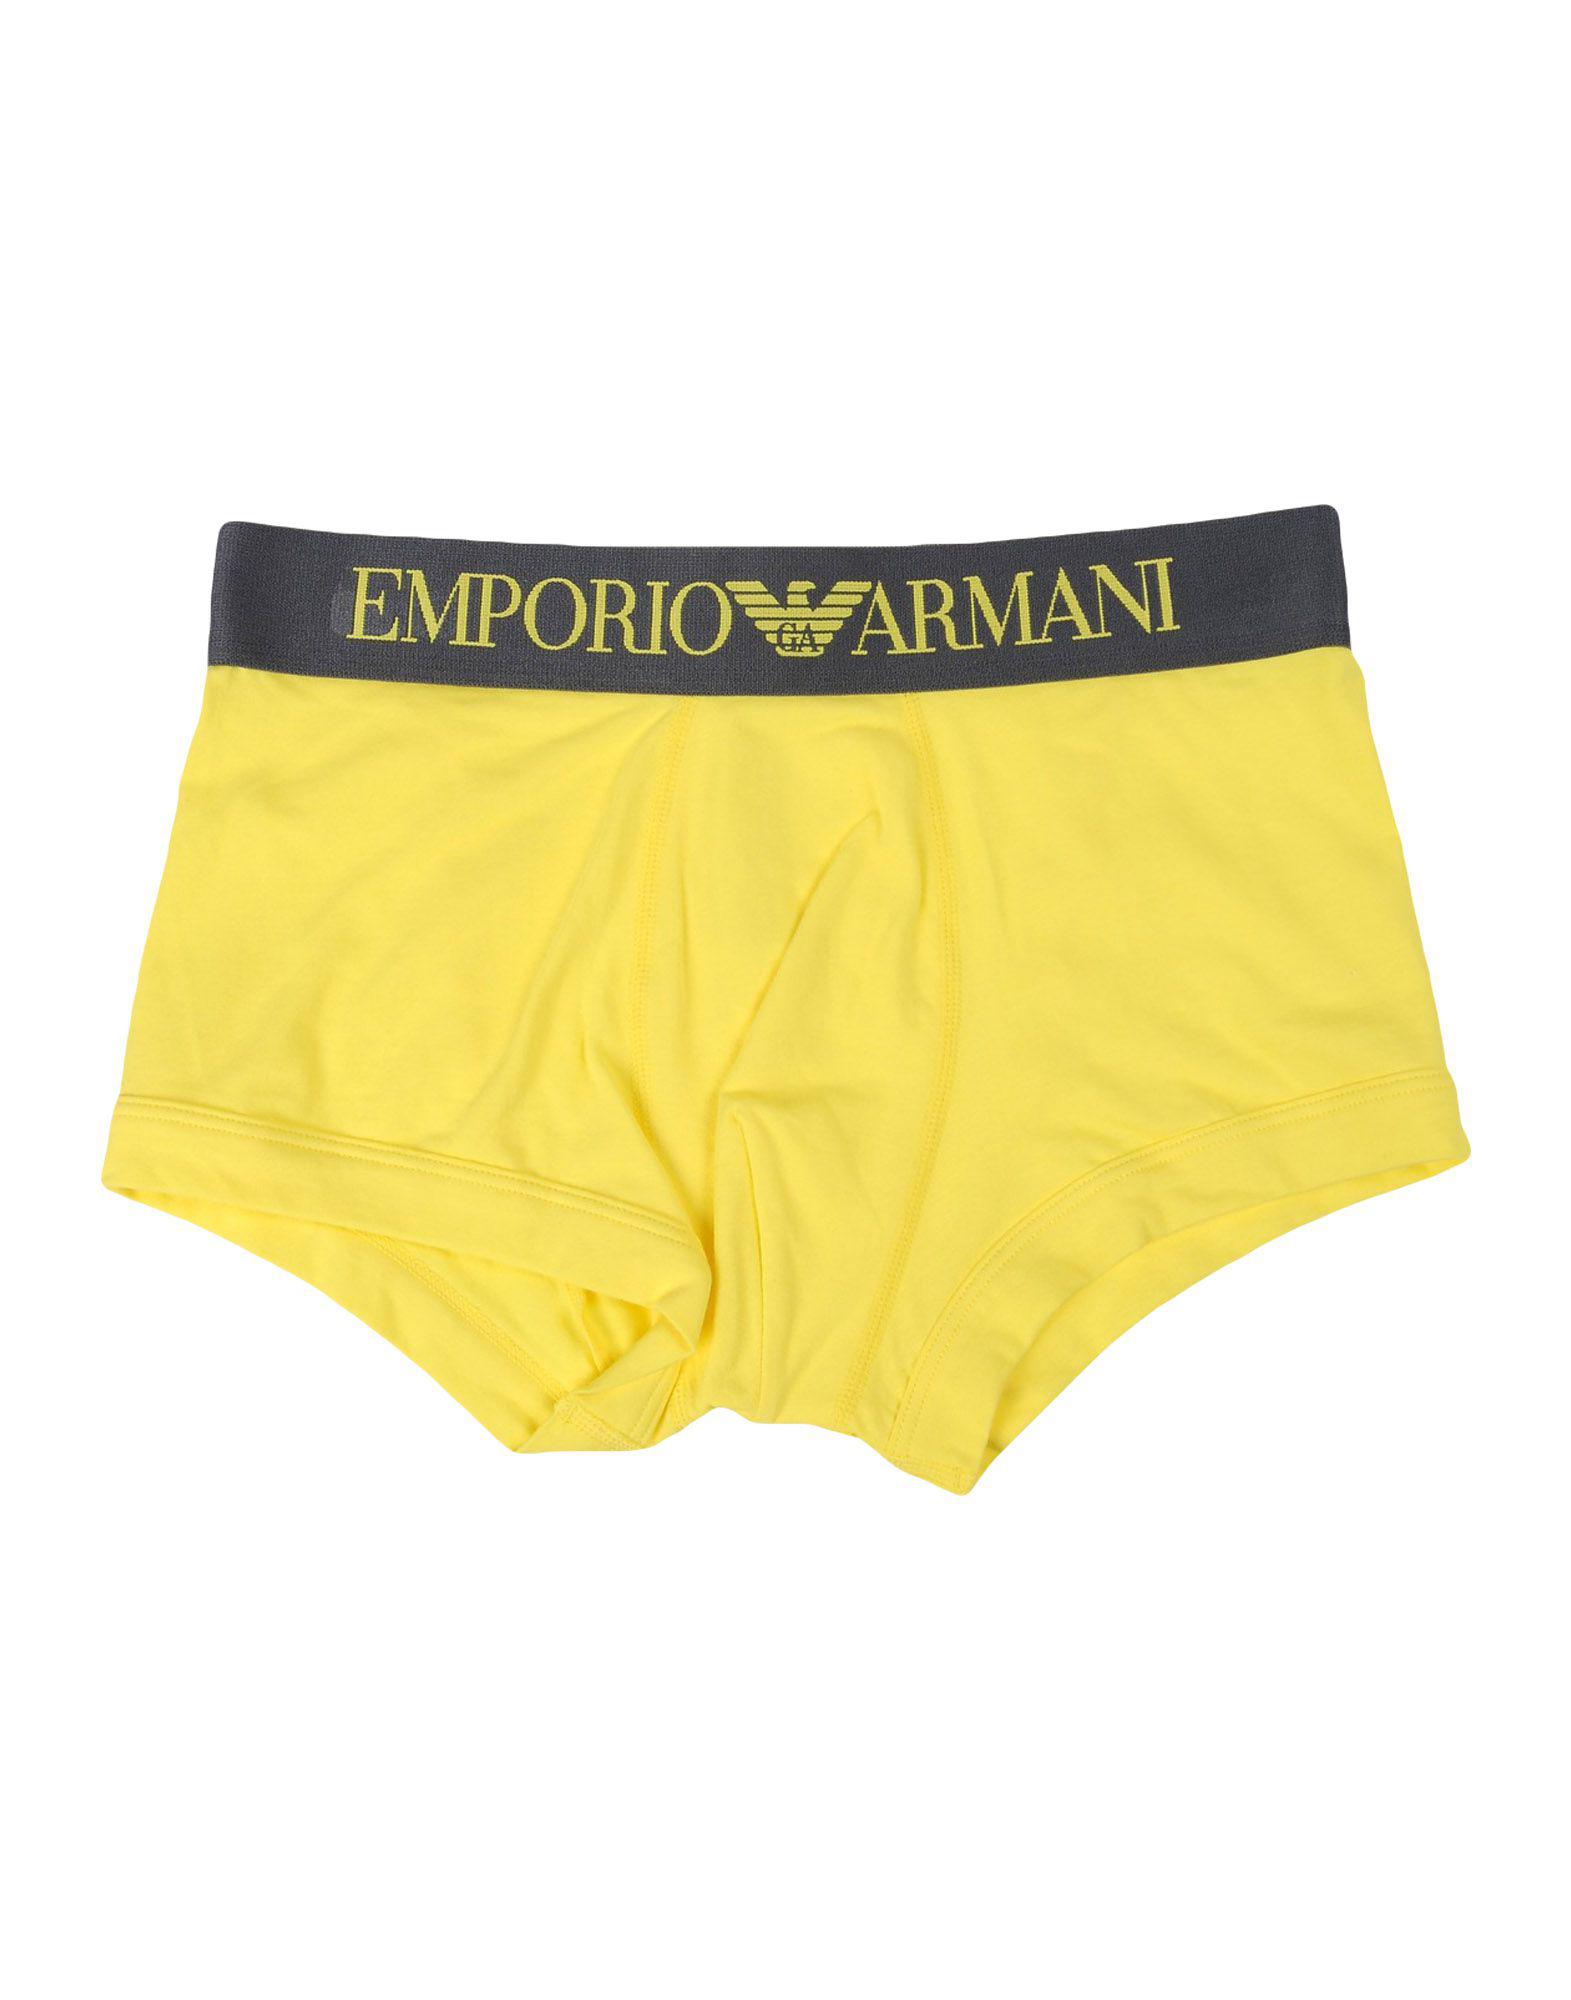 Lyst - Emporio armani Boxer in Yellow for Men